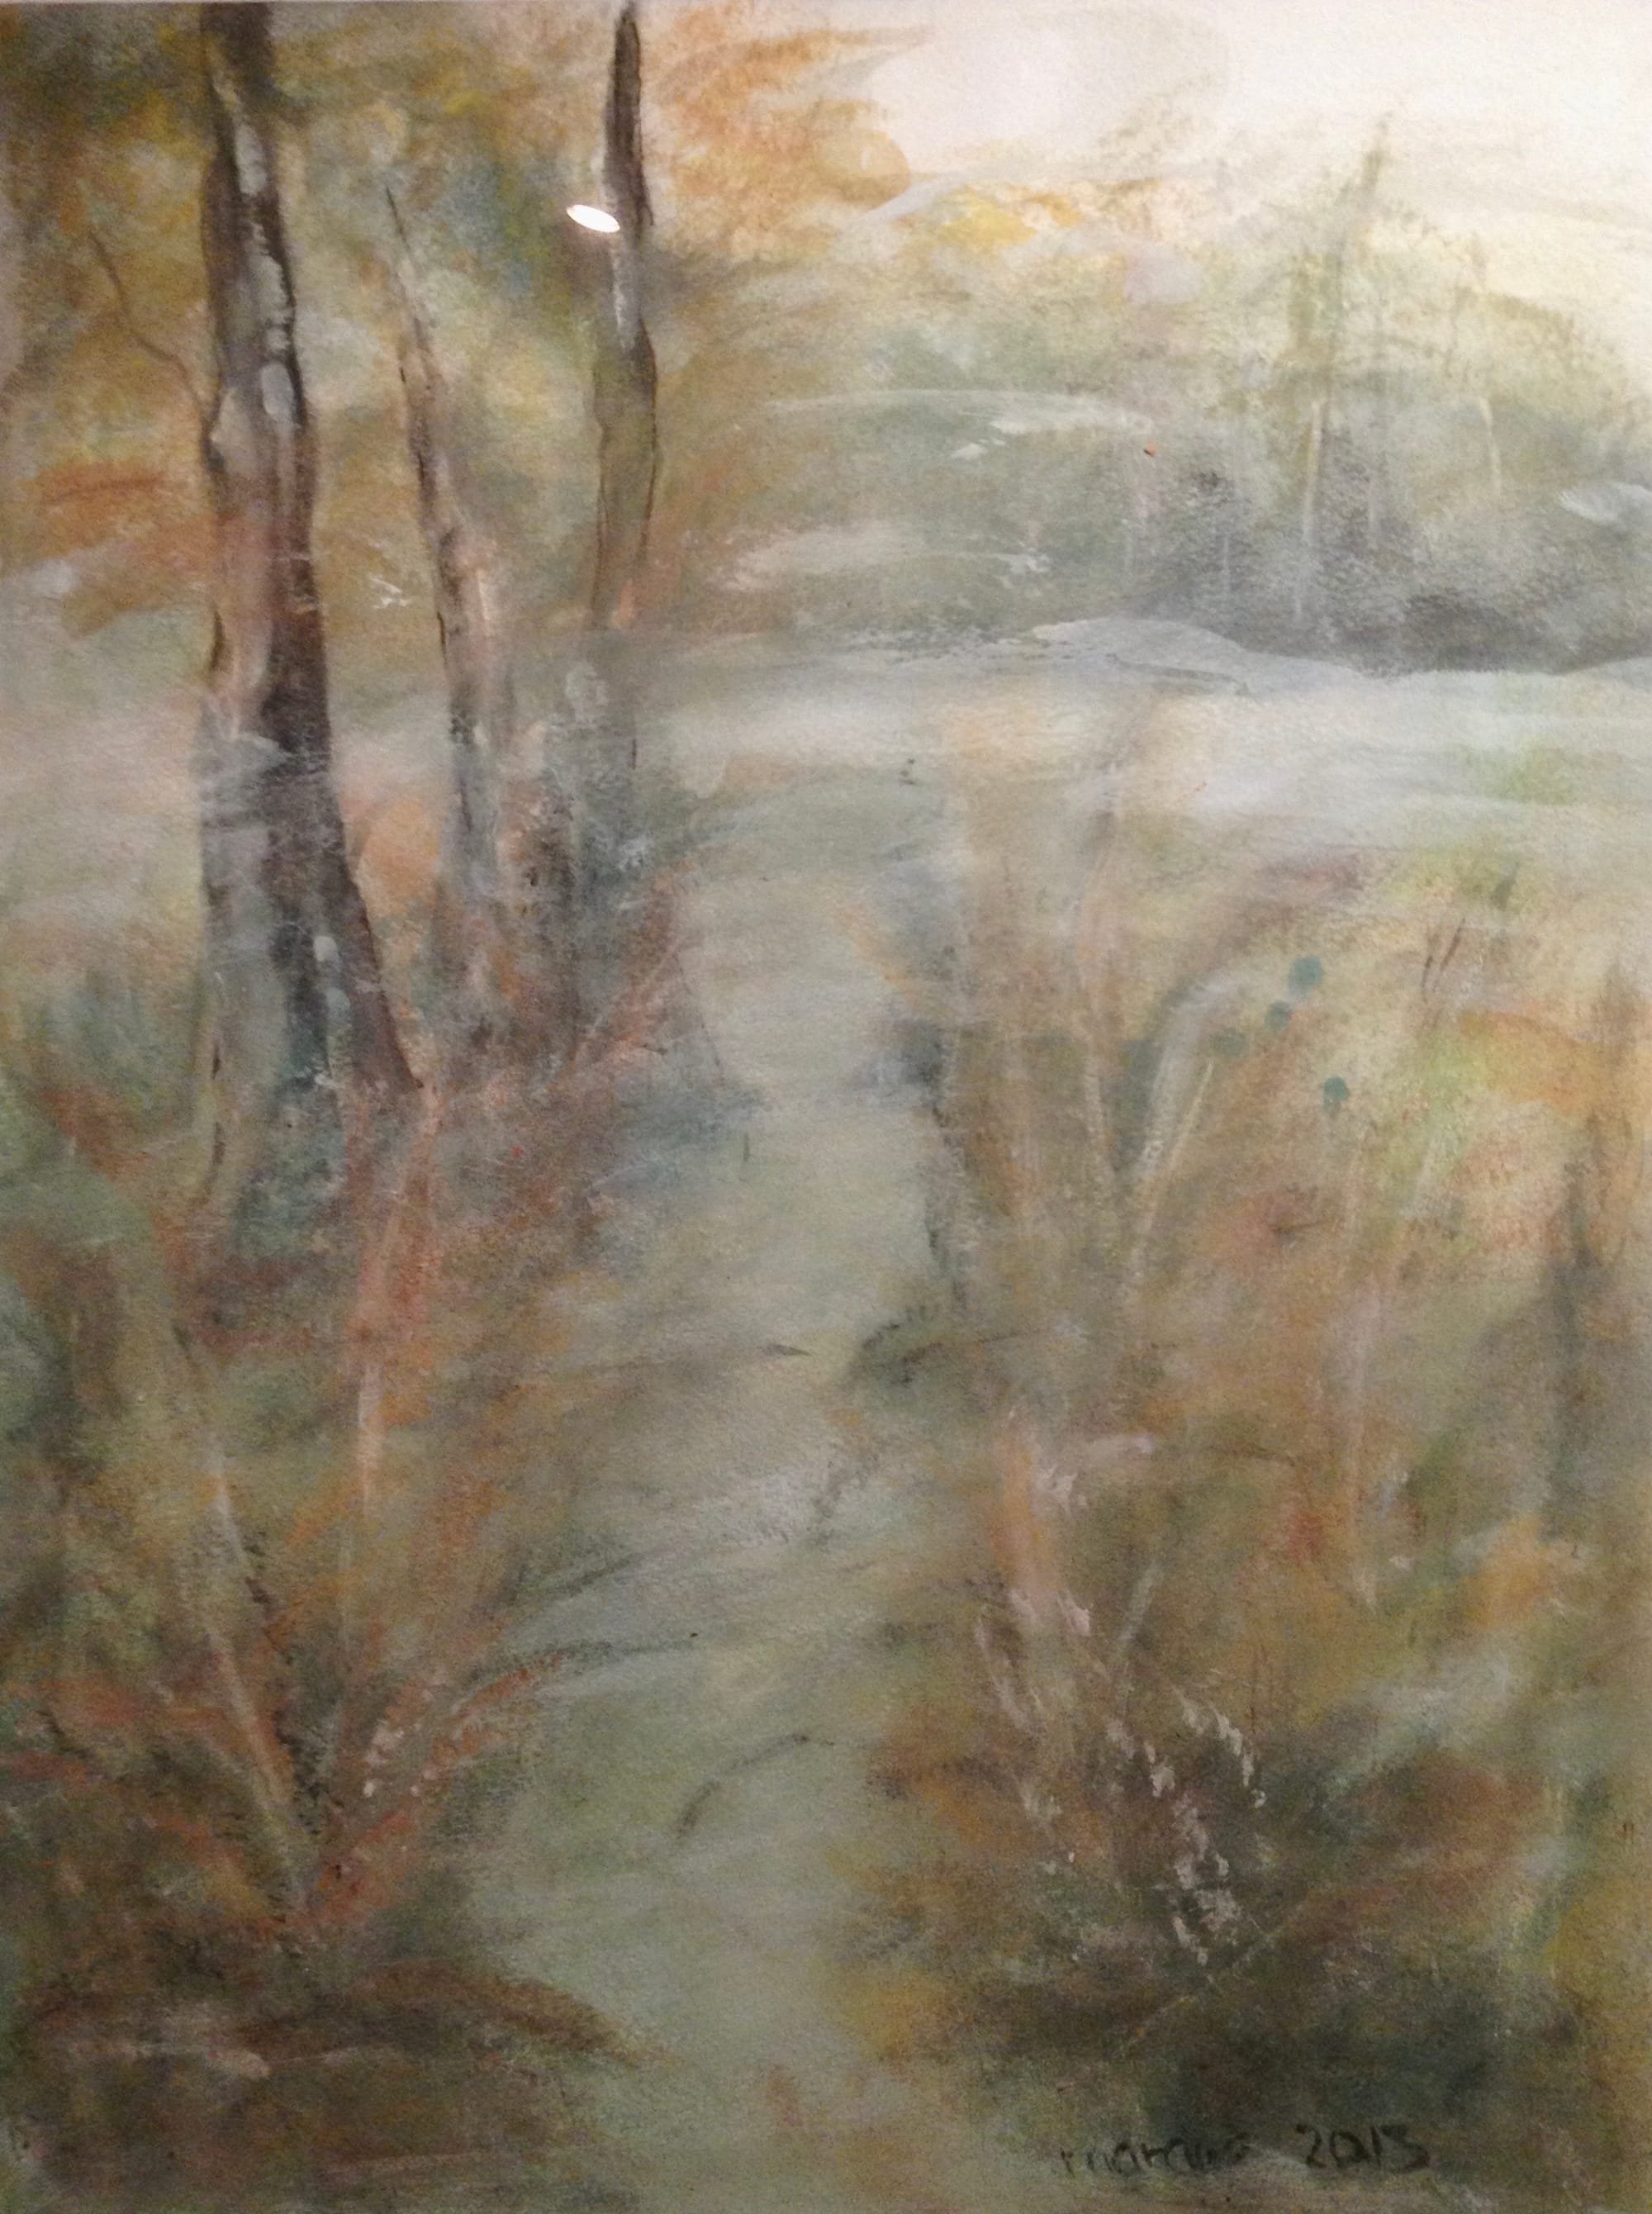 Rambower Moor, 40x50 cm, Tusche auf Papier